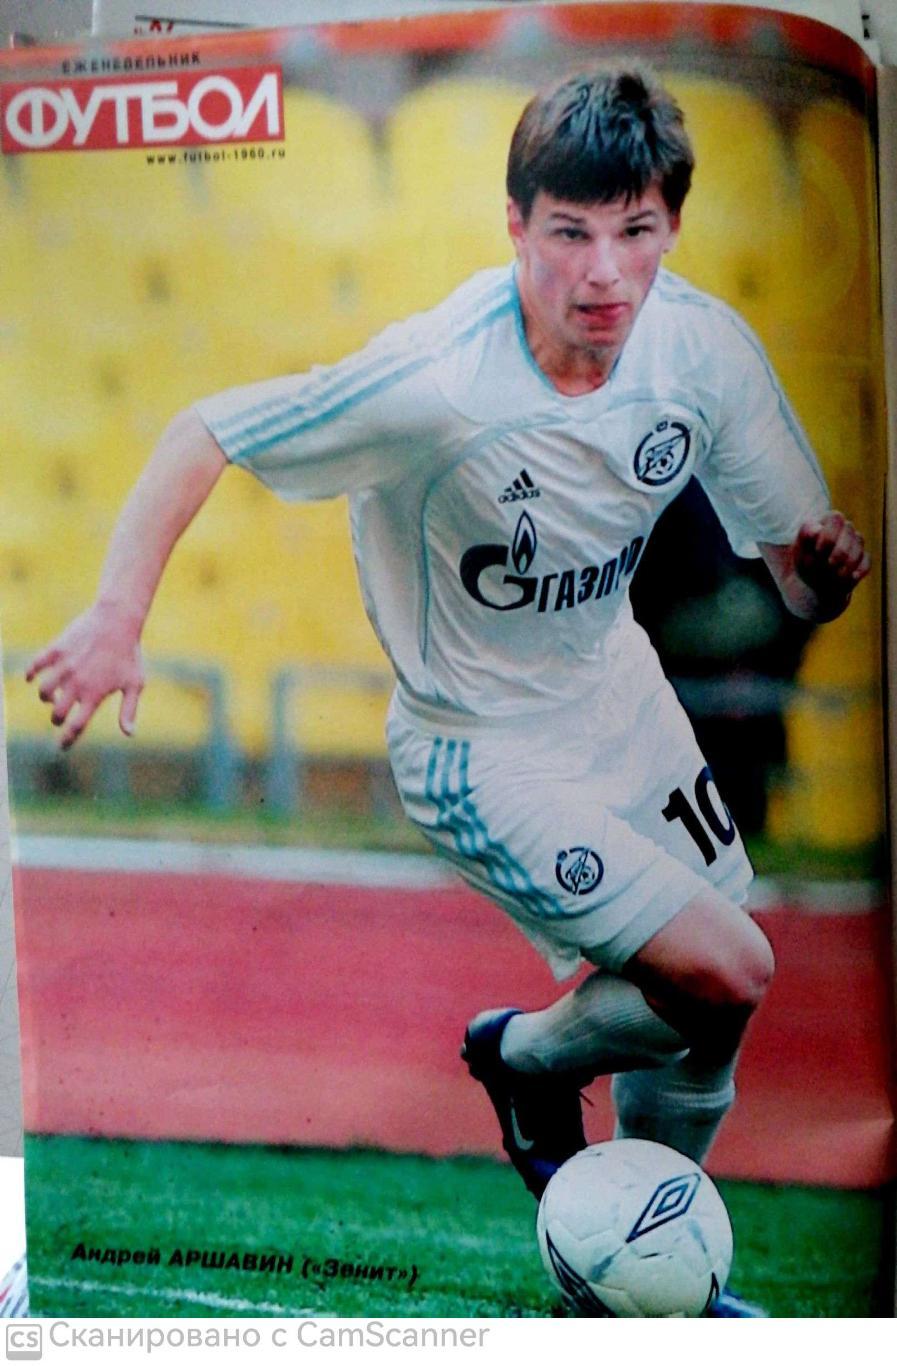 Еженедельник «Футбол» (Москва). 2007 год. №21 постер аршавин 1